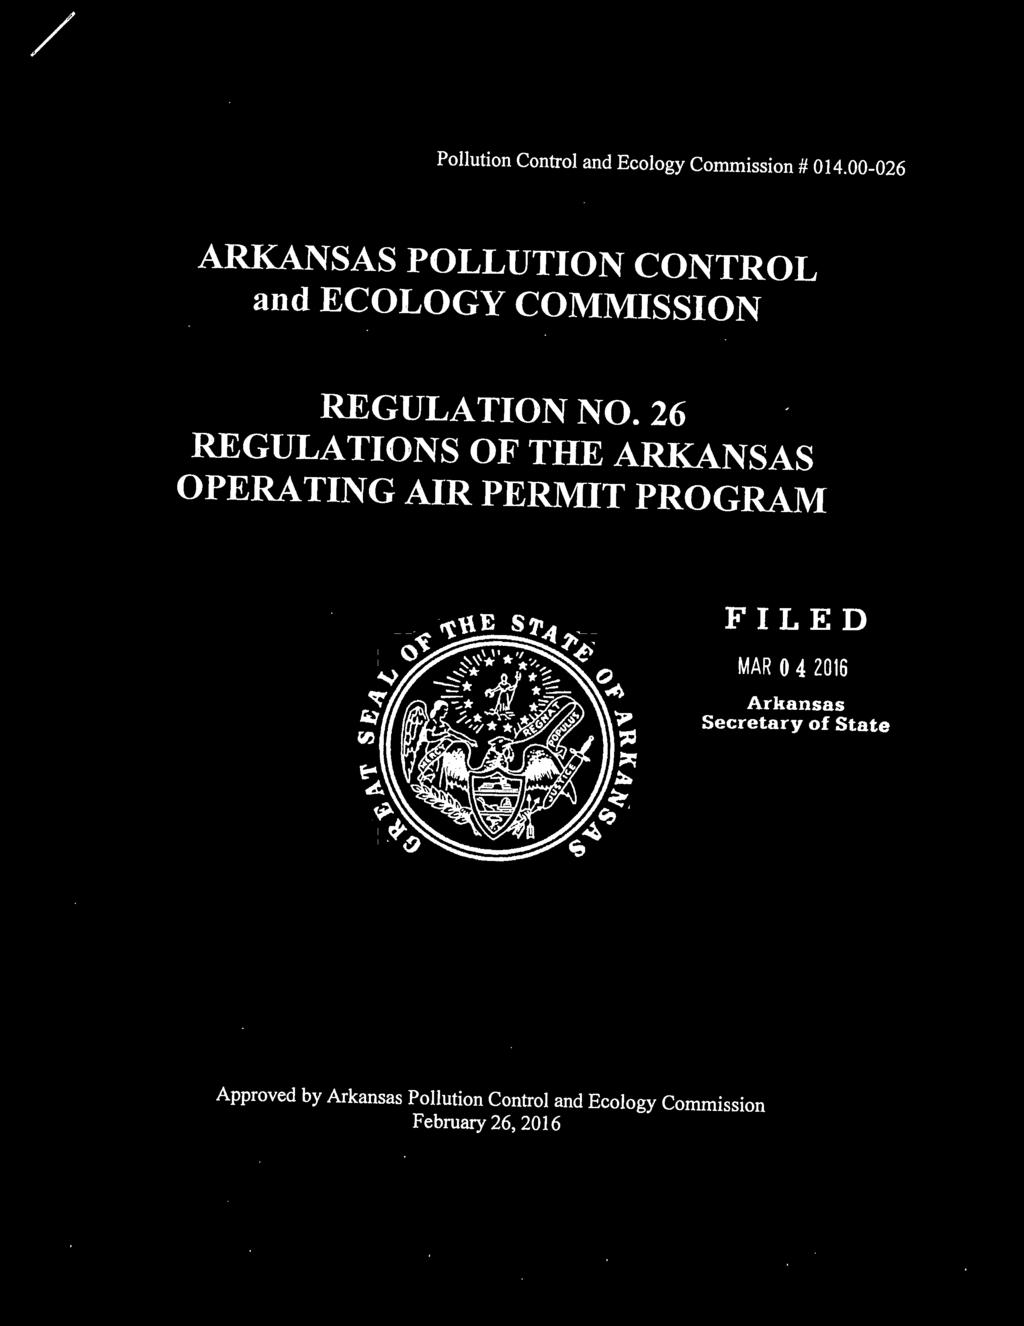 26 REGULATIONS OF THE ARKANSAS OPERATING AIR PERMIT PROGRAM FILED MAR 0 4